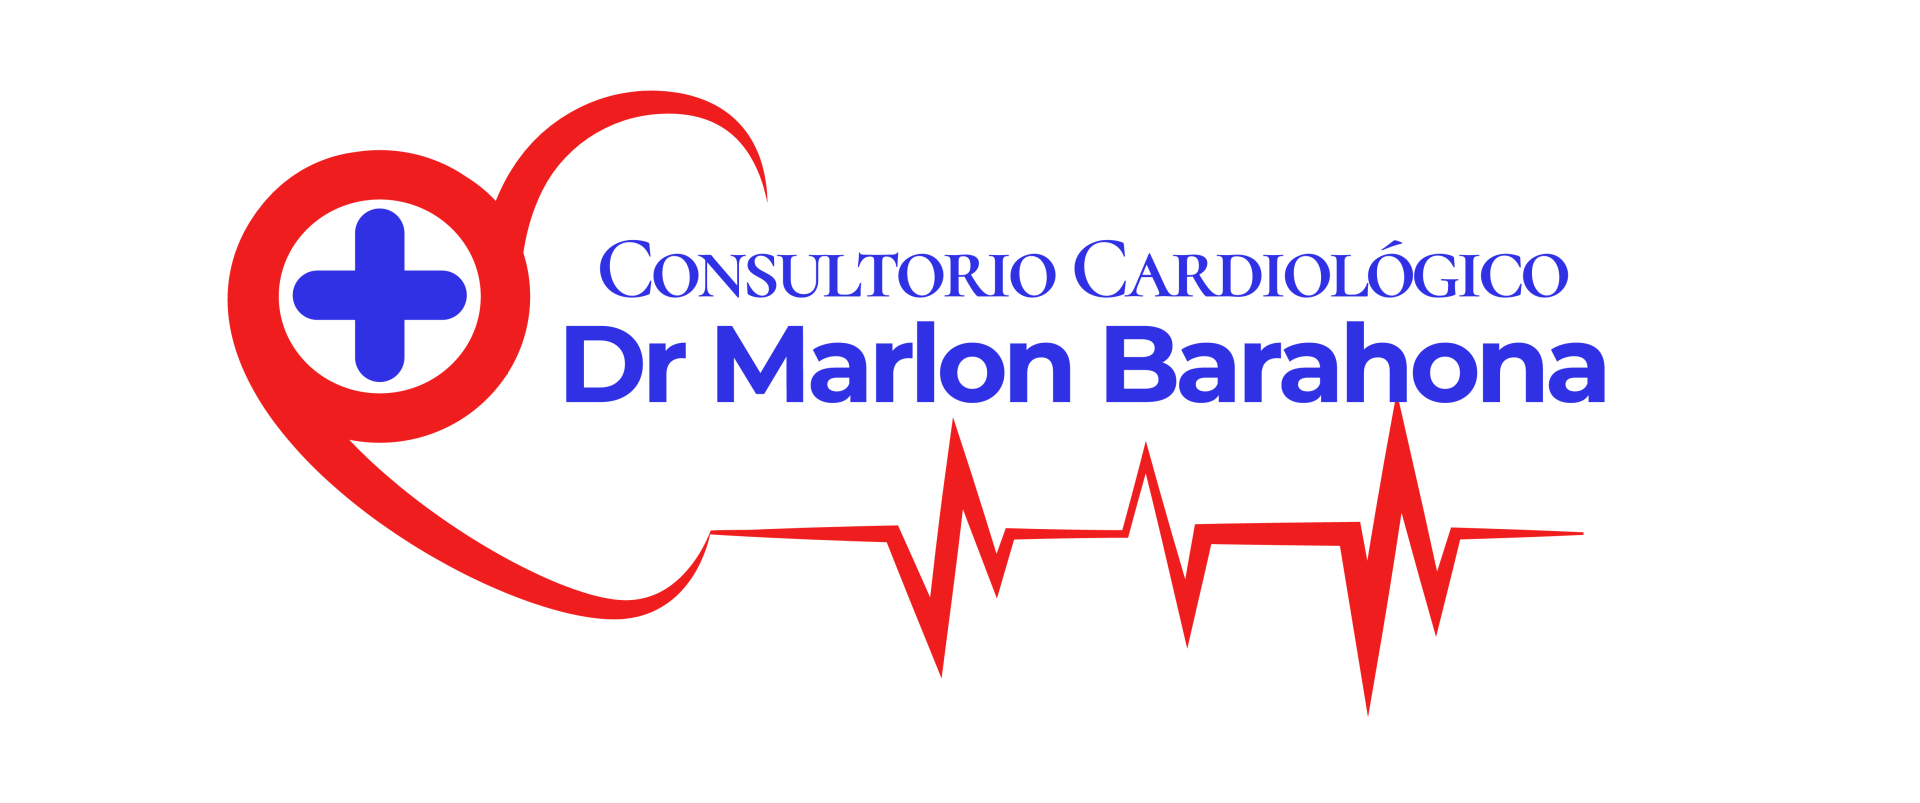 Dr. Marlon Barahona Mendoza - logo